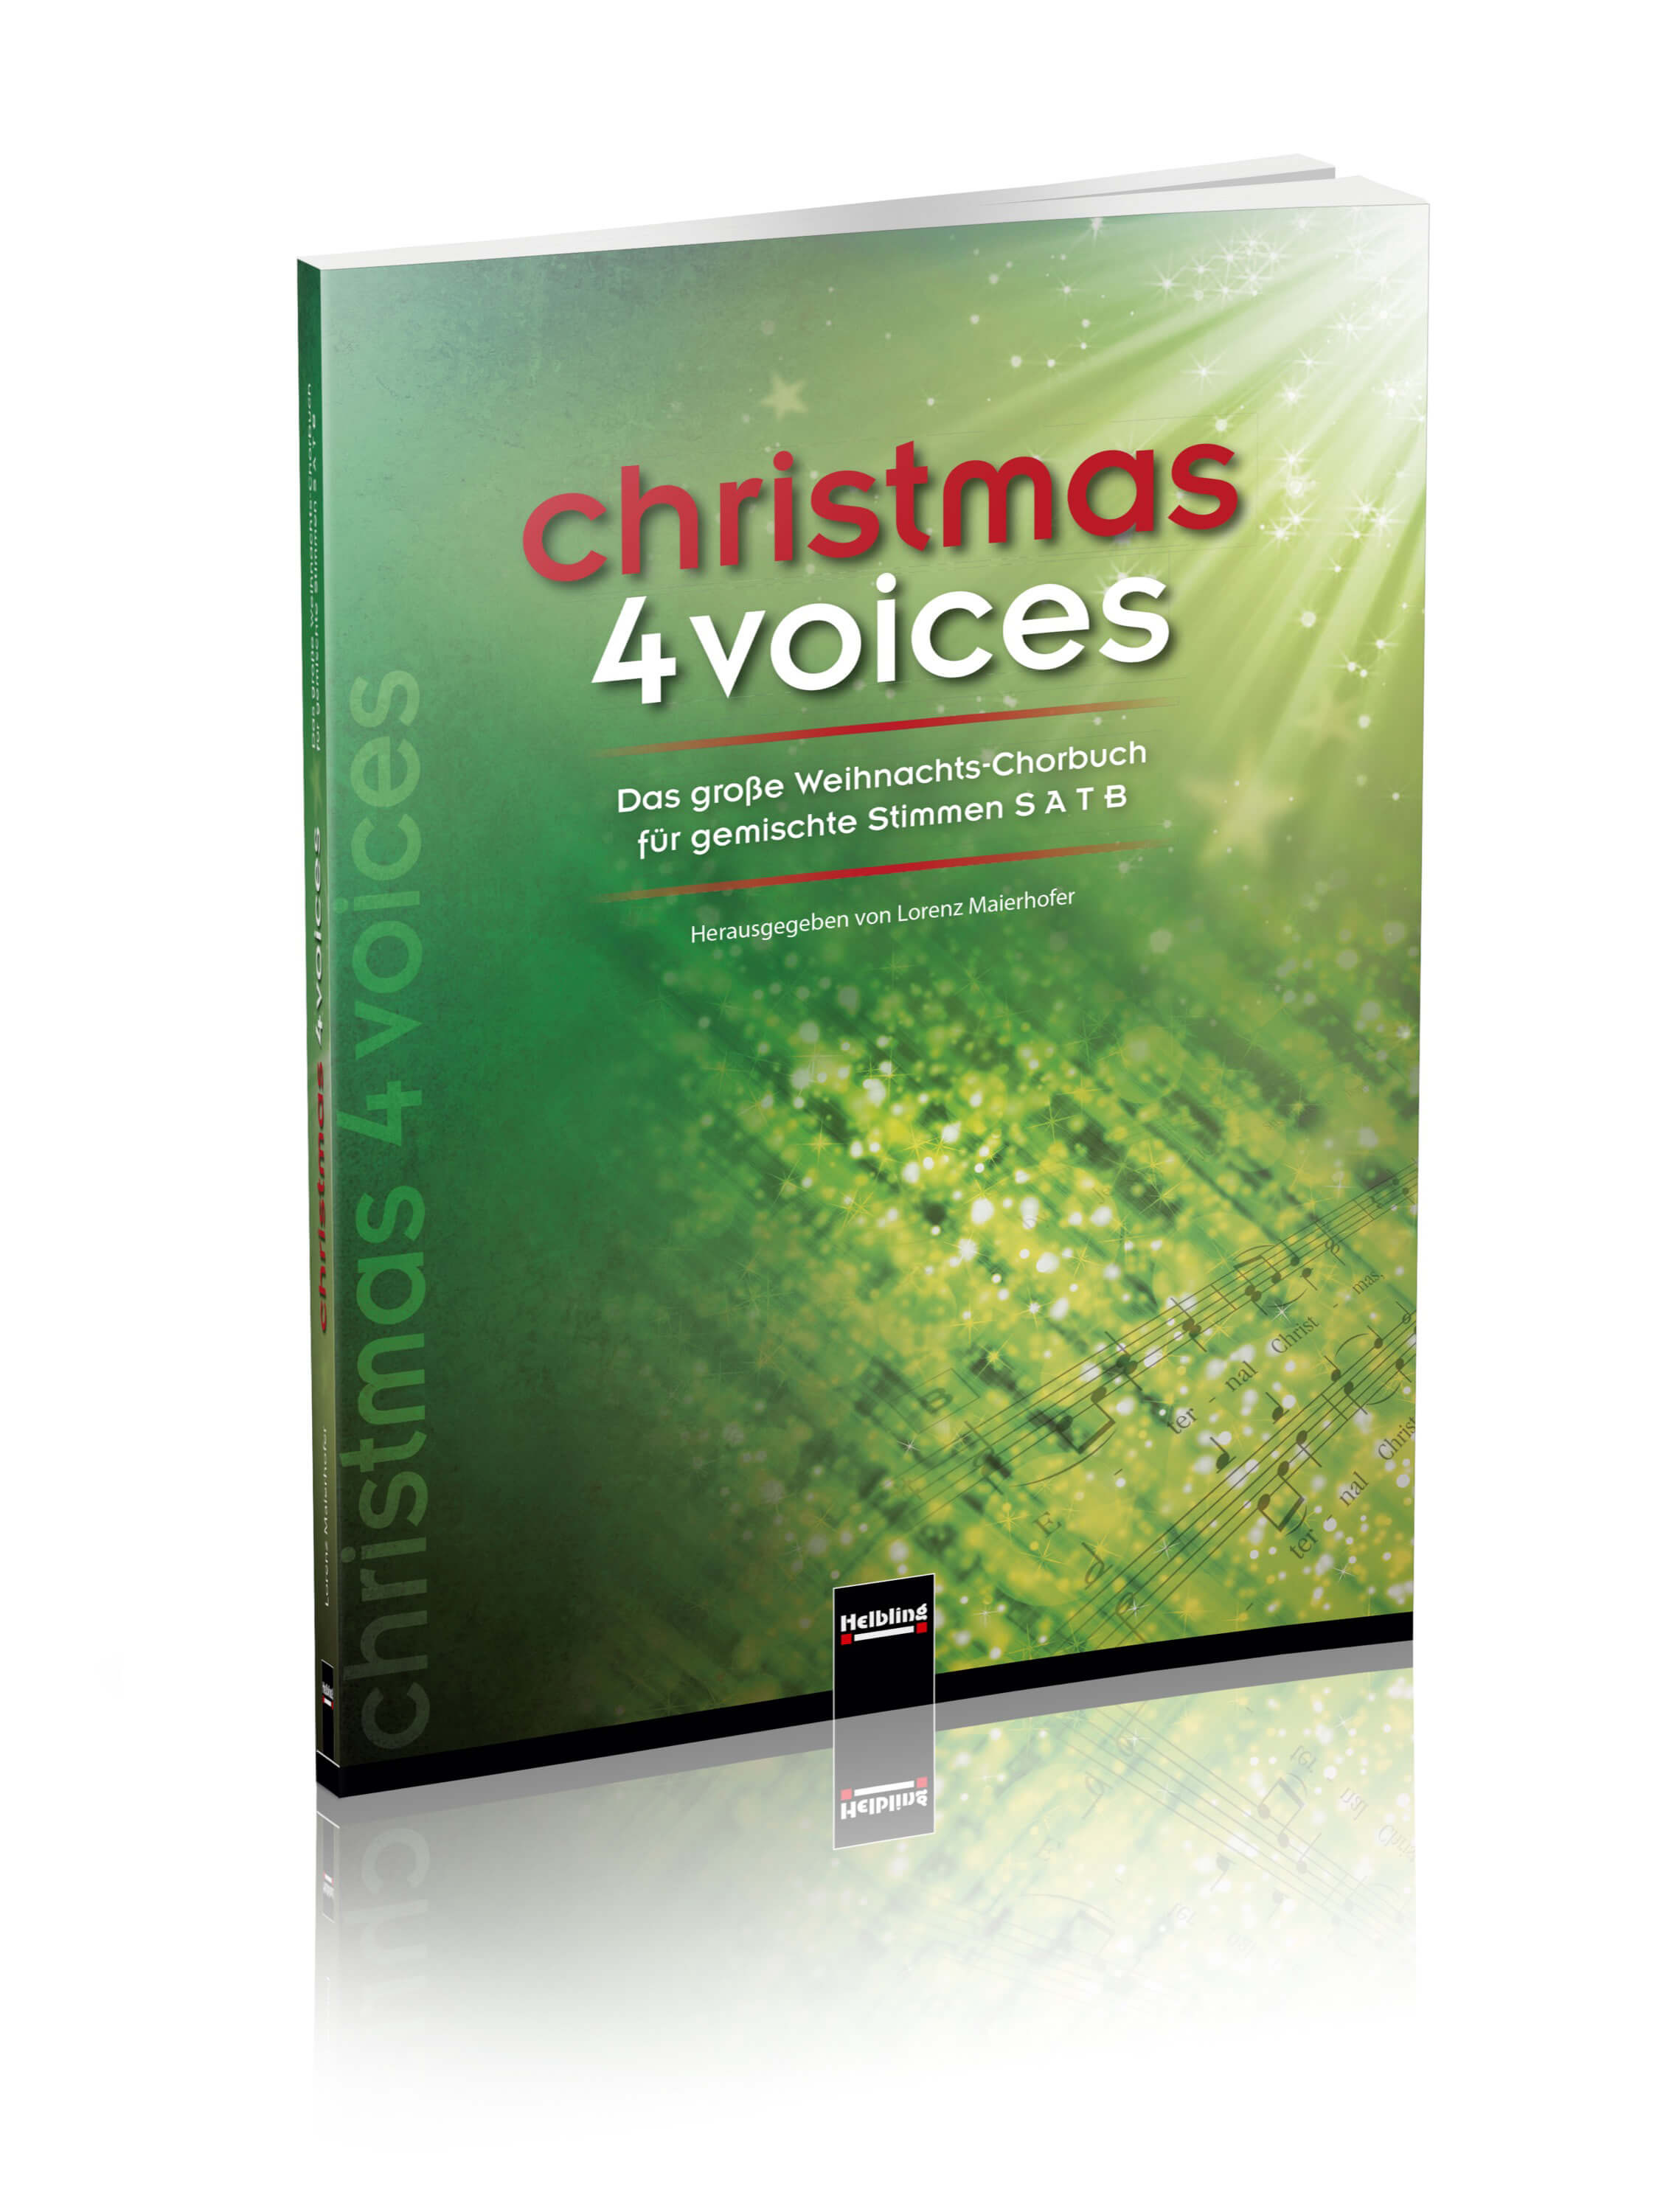 Standards_christmas_4_voices_mockup.jpg